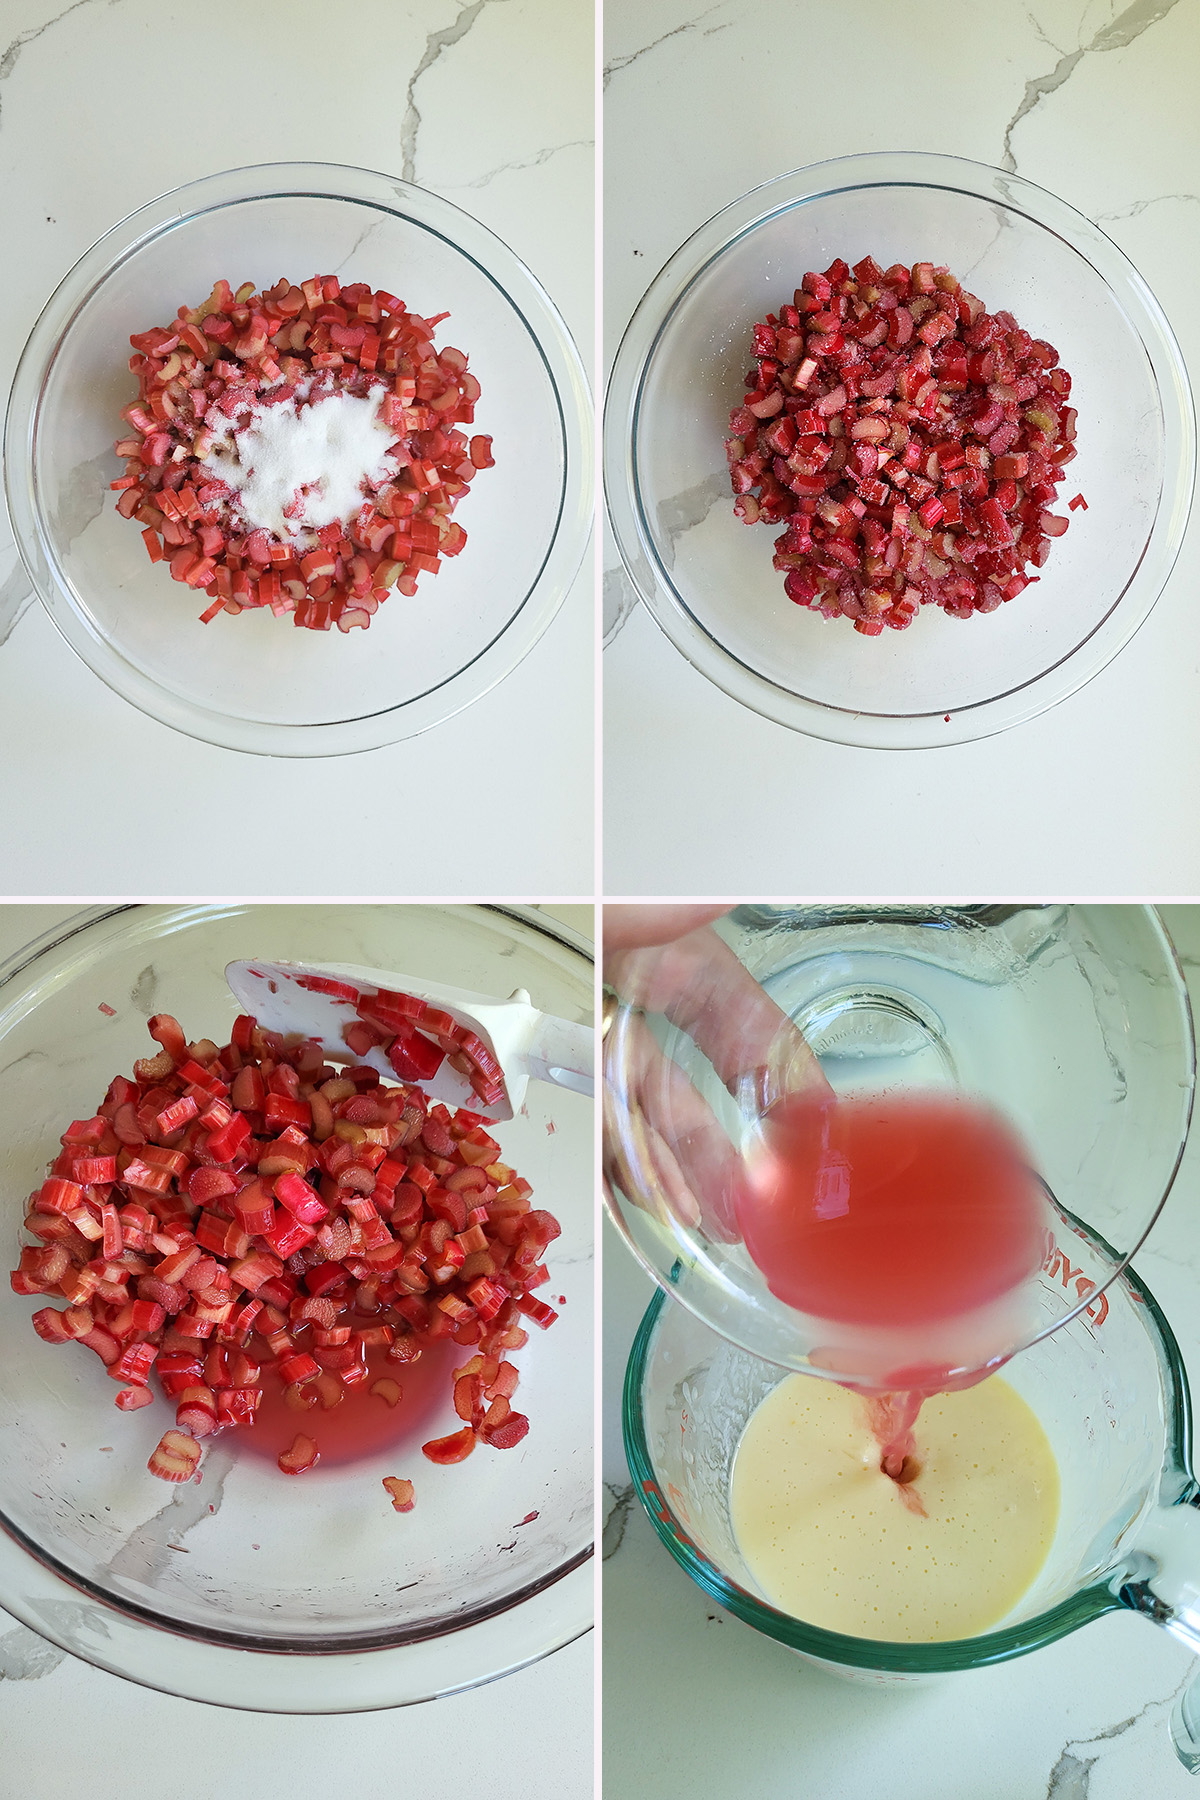 rhubarb and sugar in a glass bowl.